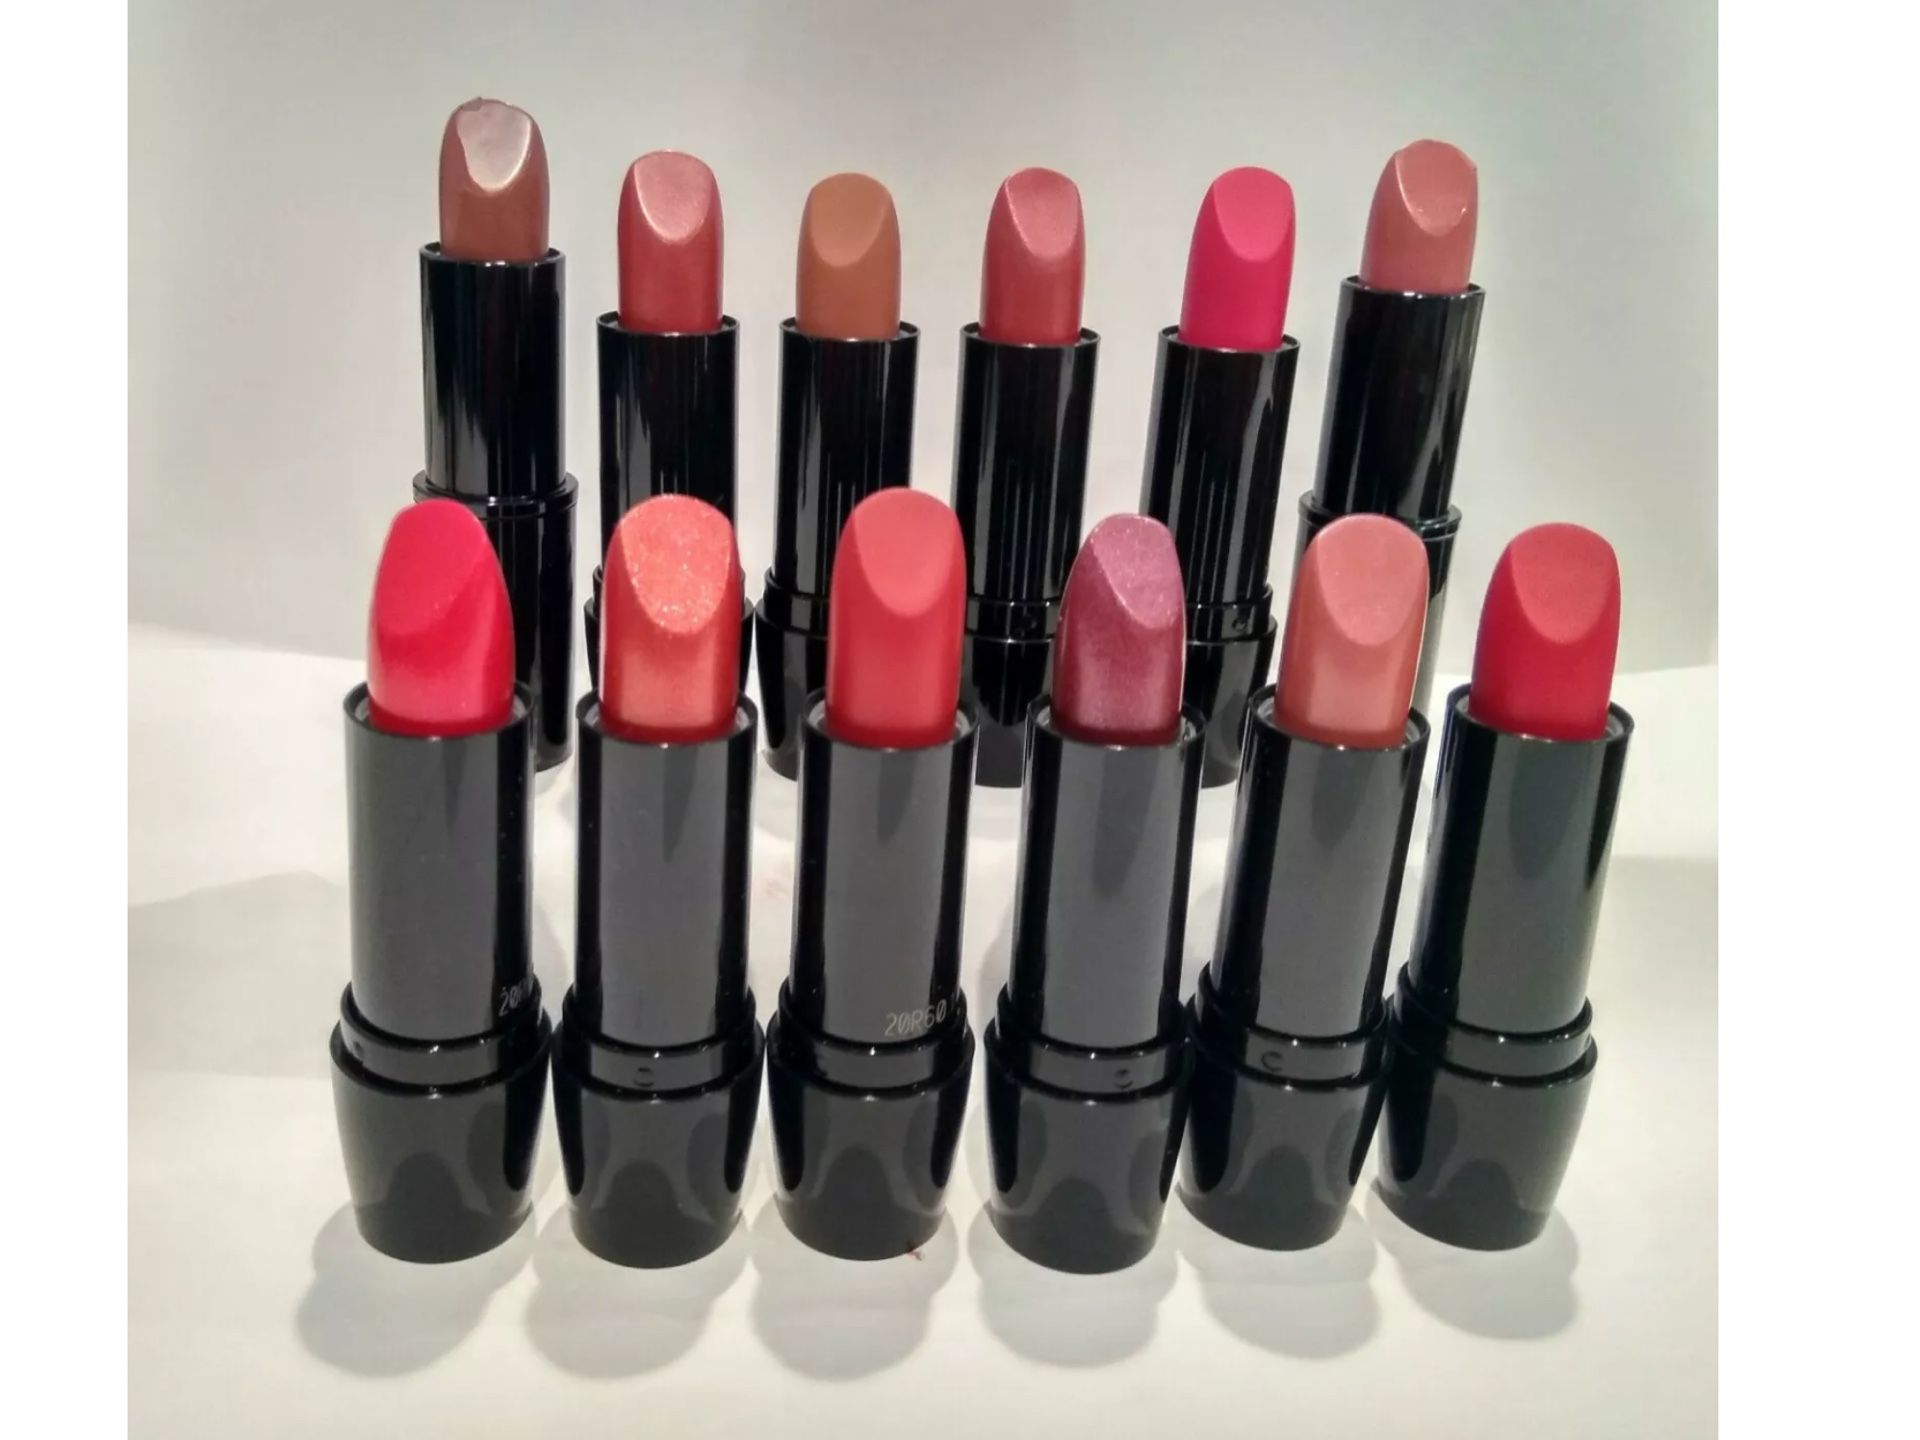 Lancôme Lipstick Brand New Buy 2 Get One Free O $10 Each.